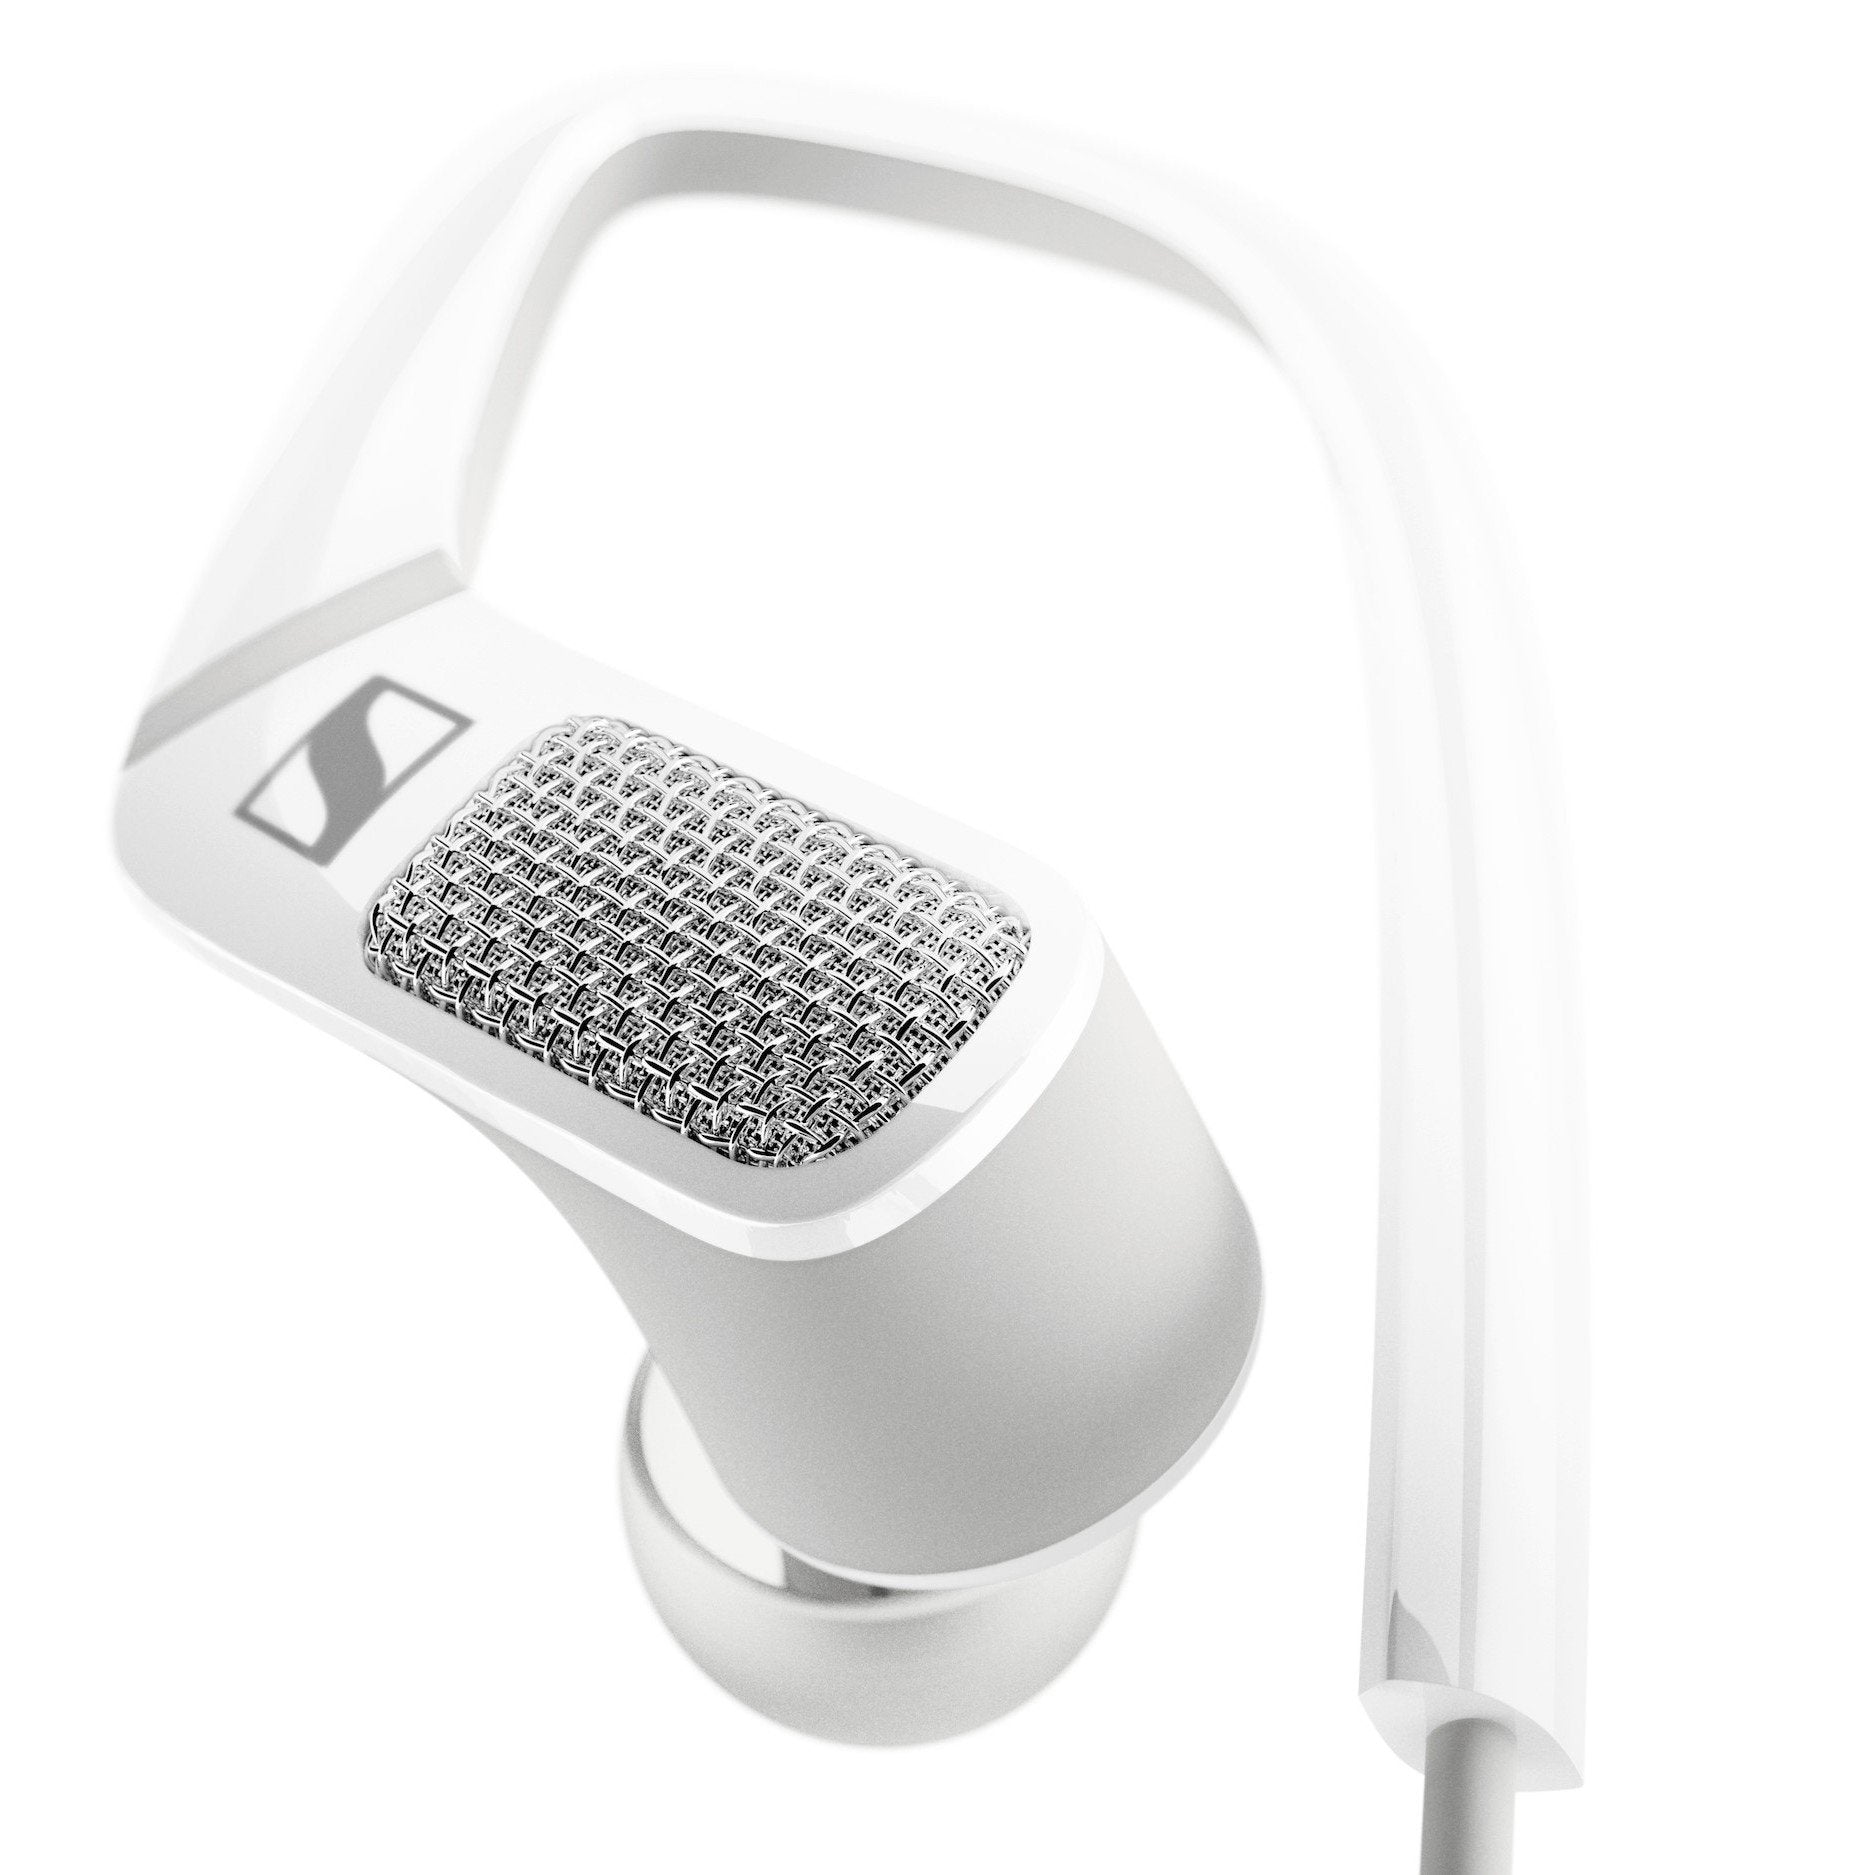 Sennheiser Ambeo Smart Headset - Mobile Binaural Recorder - AVStore